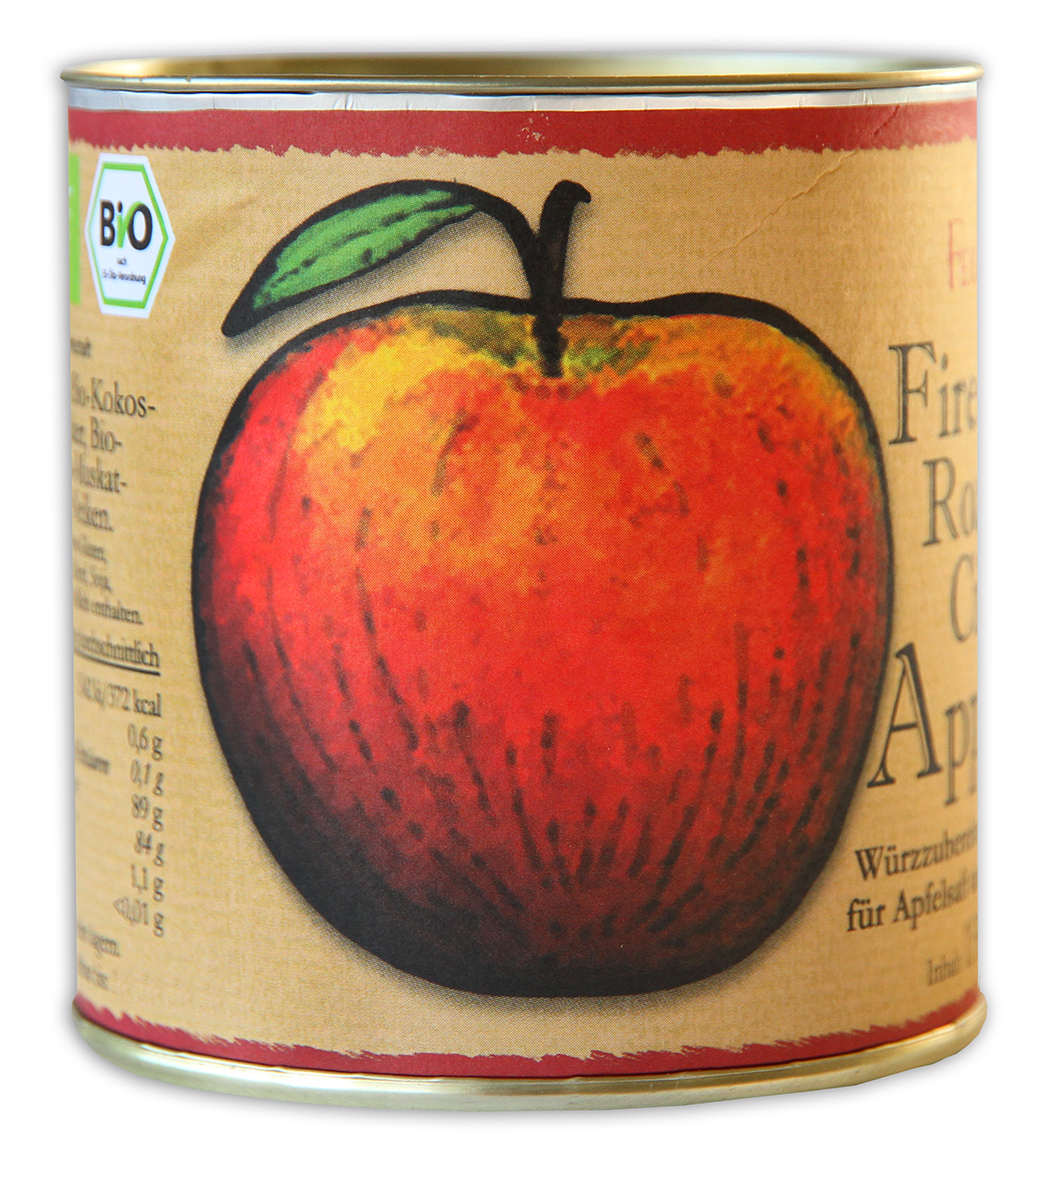 Fire Roasted Cinnamon Apple Spice - Apfelsaftgewürz Bio